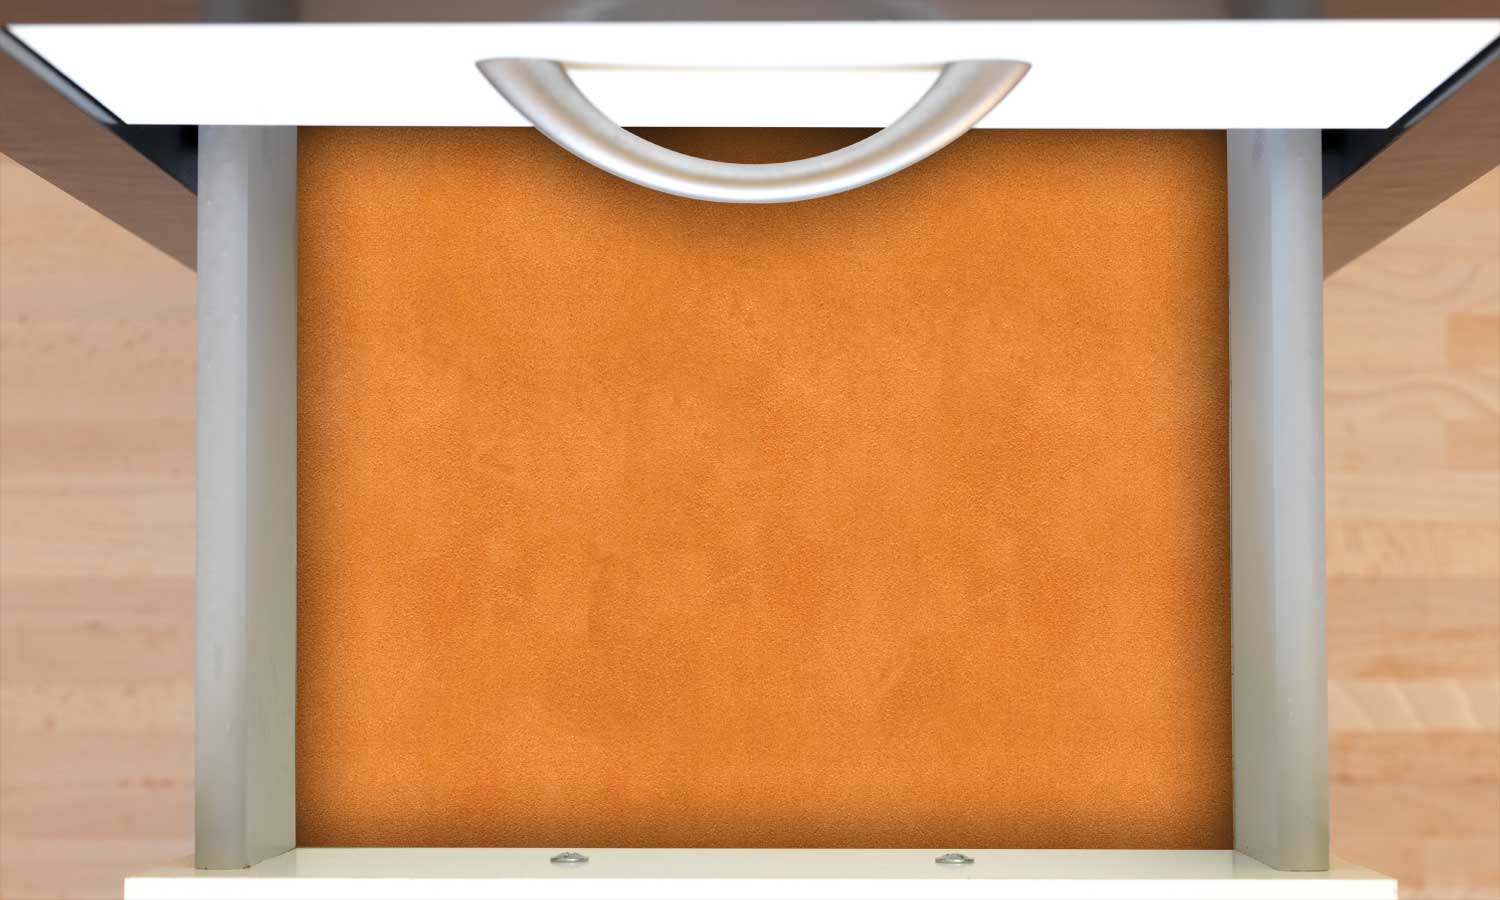 Samoljepljiva folija za namještaj - Narančasta koža  PAT095